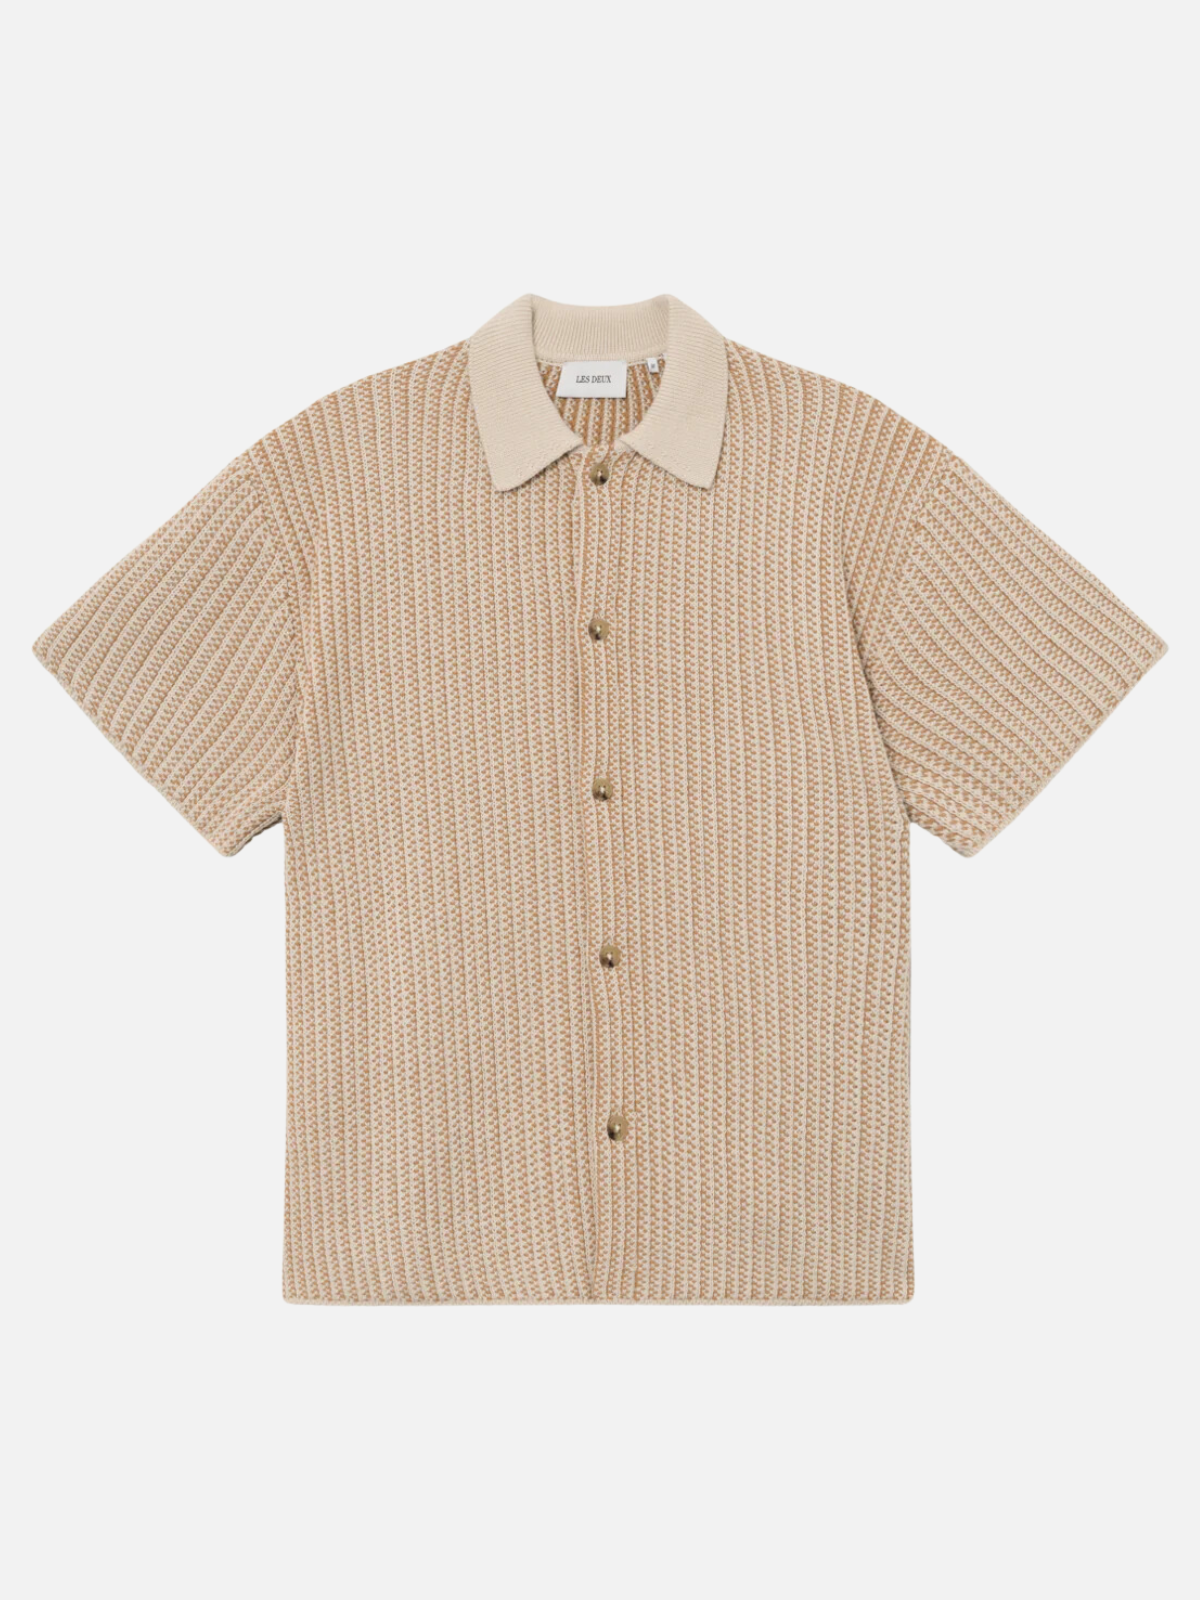 les deux easton knitted ss short sleeve shirt camel ivory 100% organic cotton sweater shirt kempt athens ga georgia men's clothing store